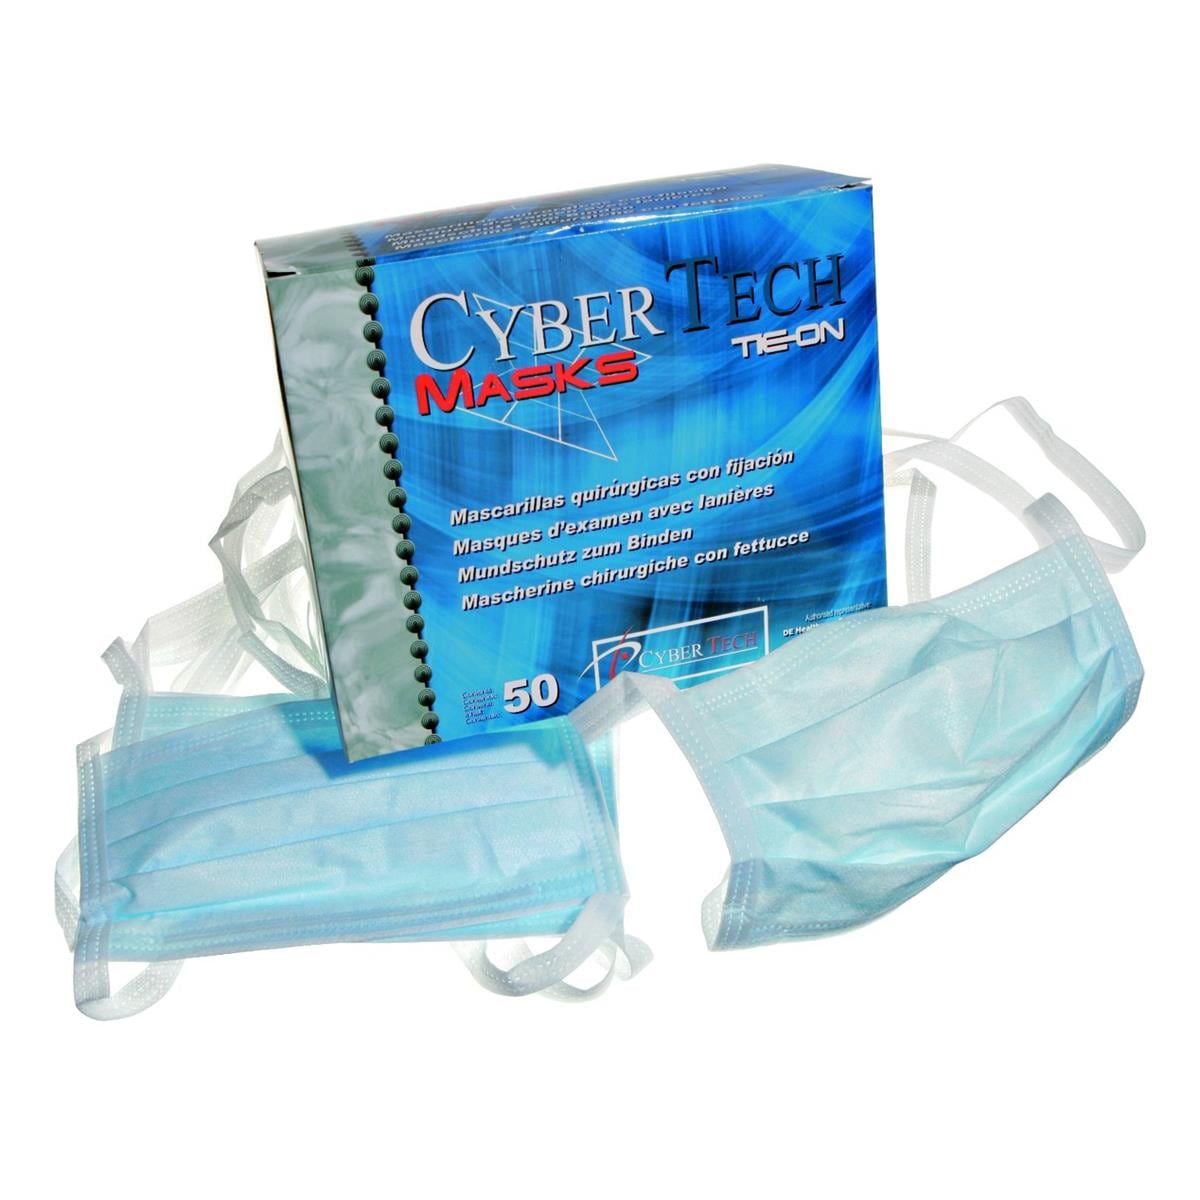 Masques Cybermasks Tie On CYBERTECH - La bote de 50 - Blanc